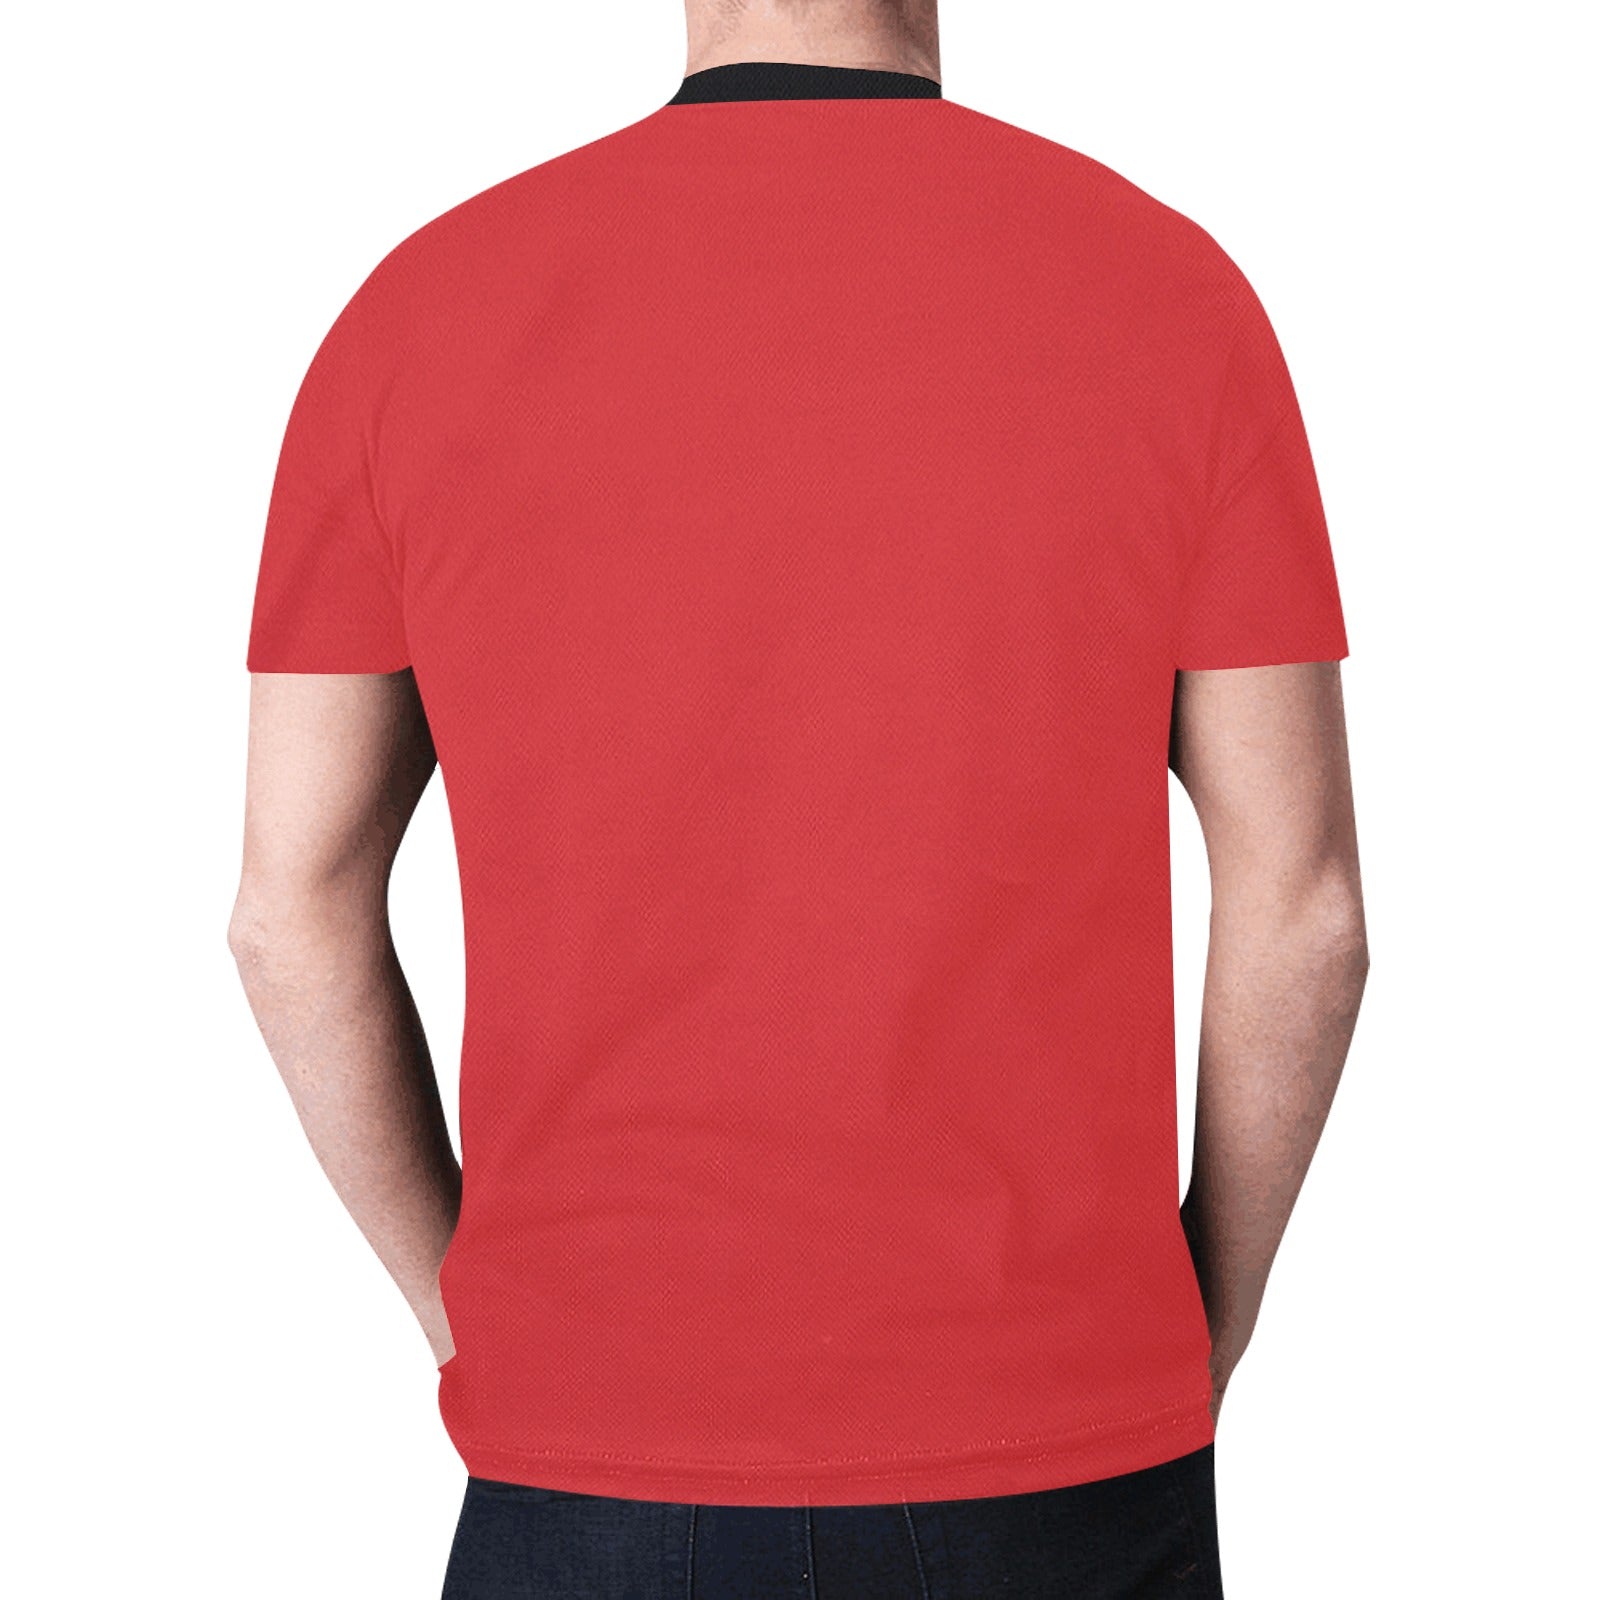 Elk Spirit Guide (Red) T-shirt for Men